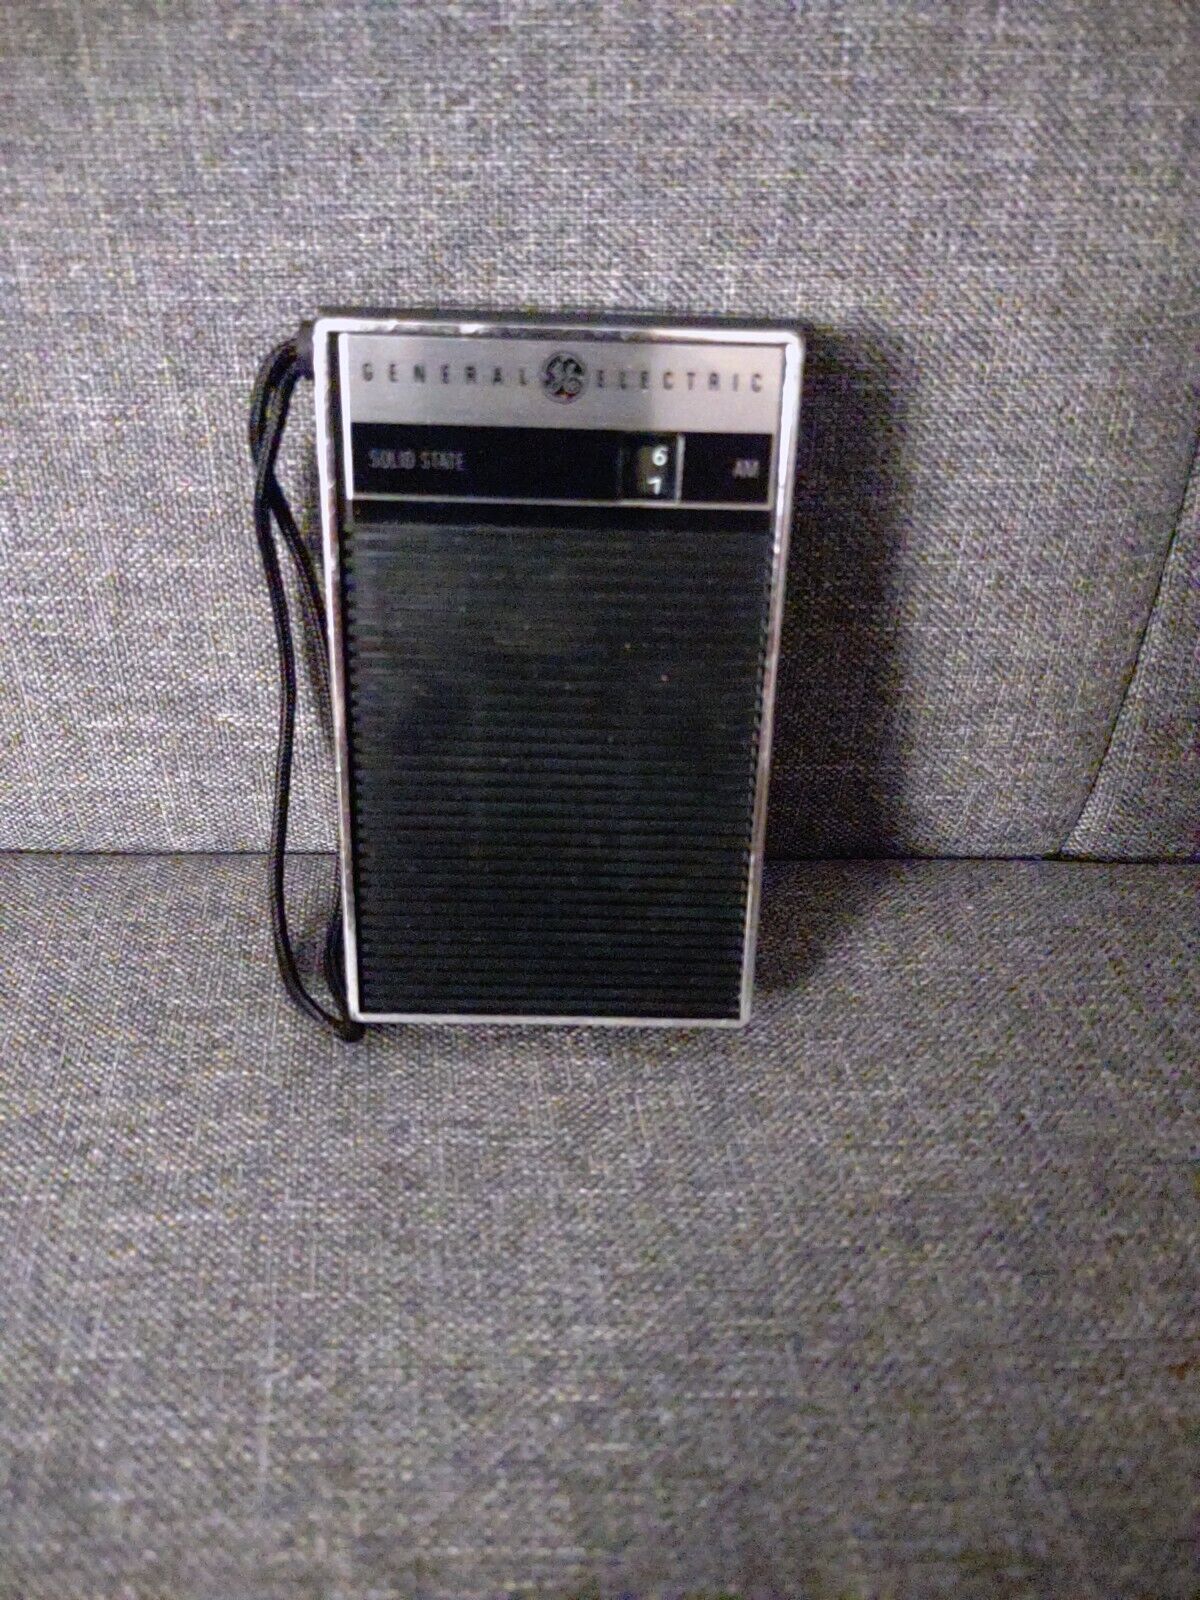 Vintage 1970s GENERAL ELECTRIC  P-2790 Black AM Transistor Radio w/ Original Box